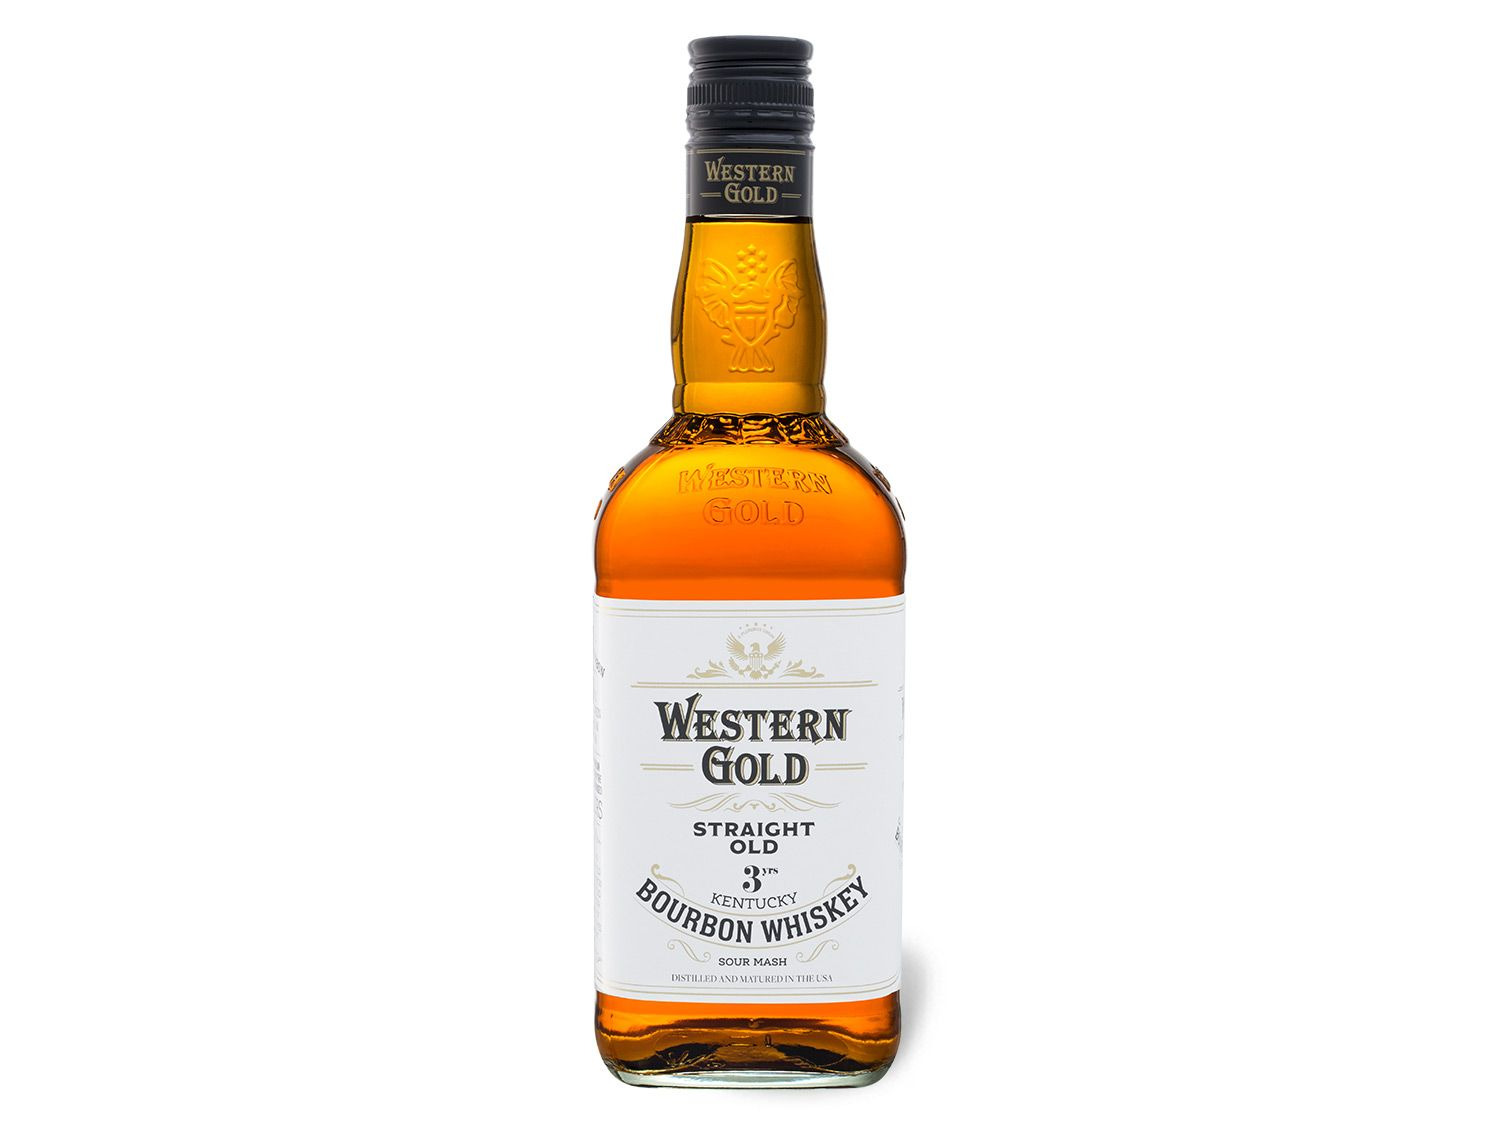 Whiskey GOLD Bourbon LIDL WESTERN | 40% Vol